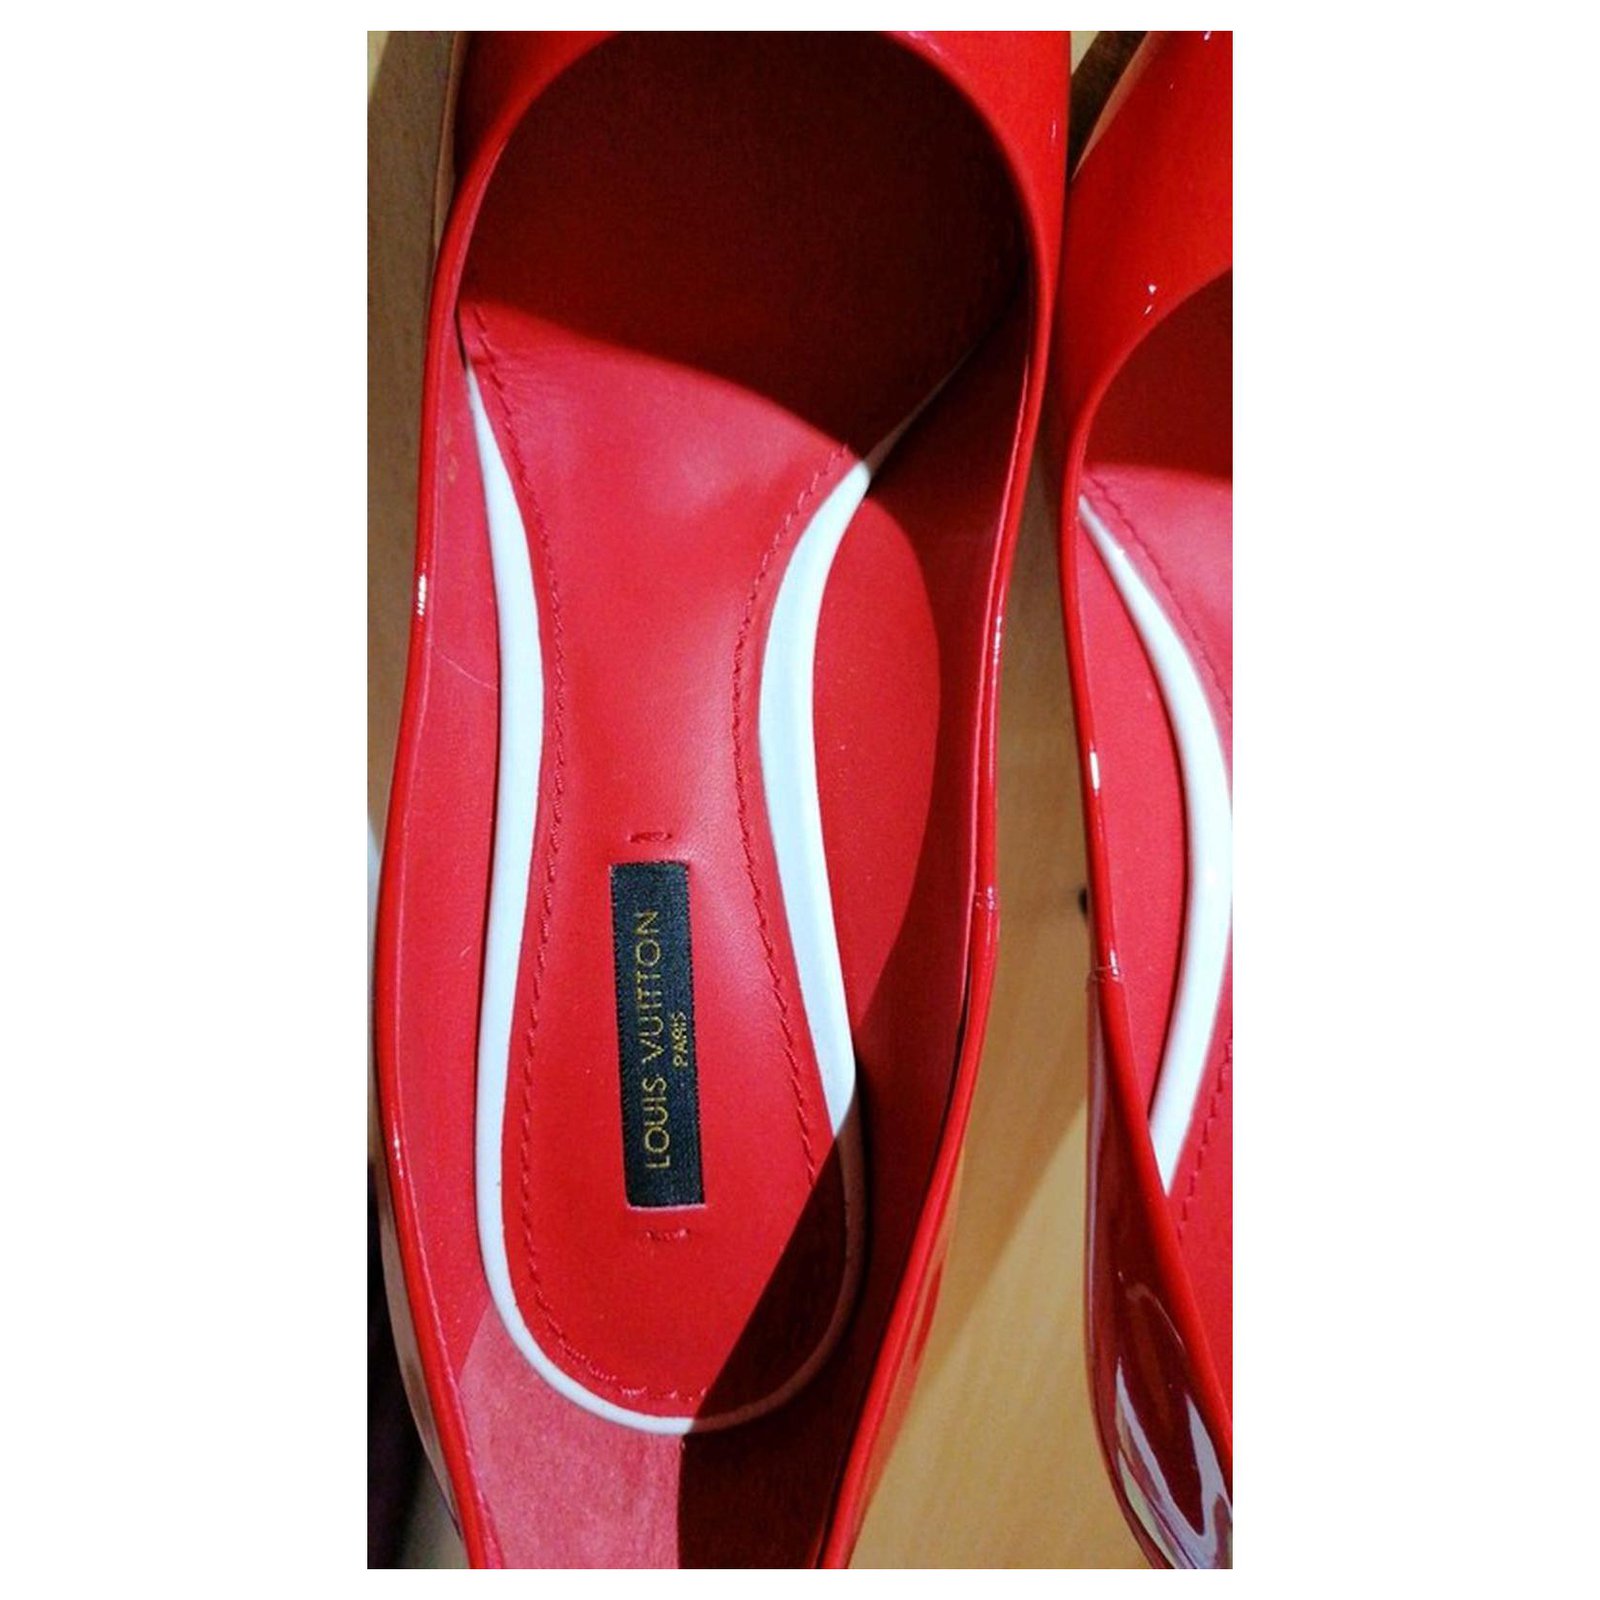 LOUIS VUITTON - Women's Fashion Red High Heels Shoes Magazine AD -  D466